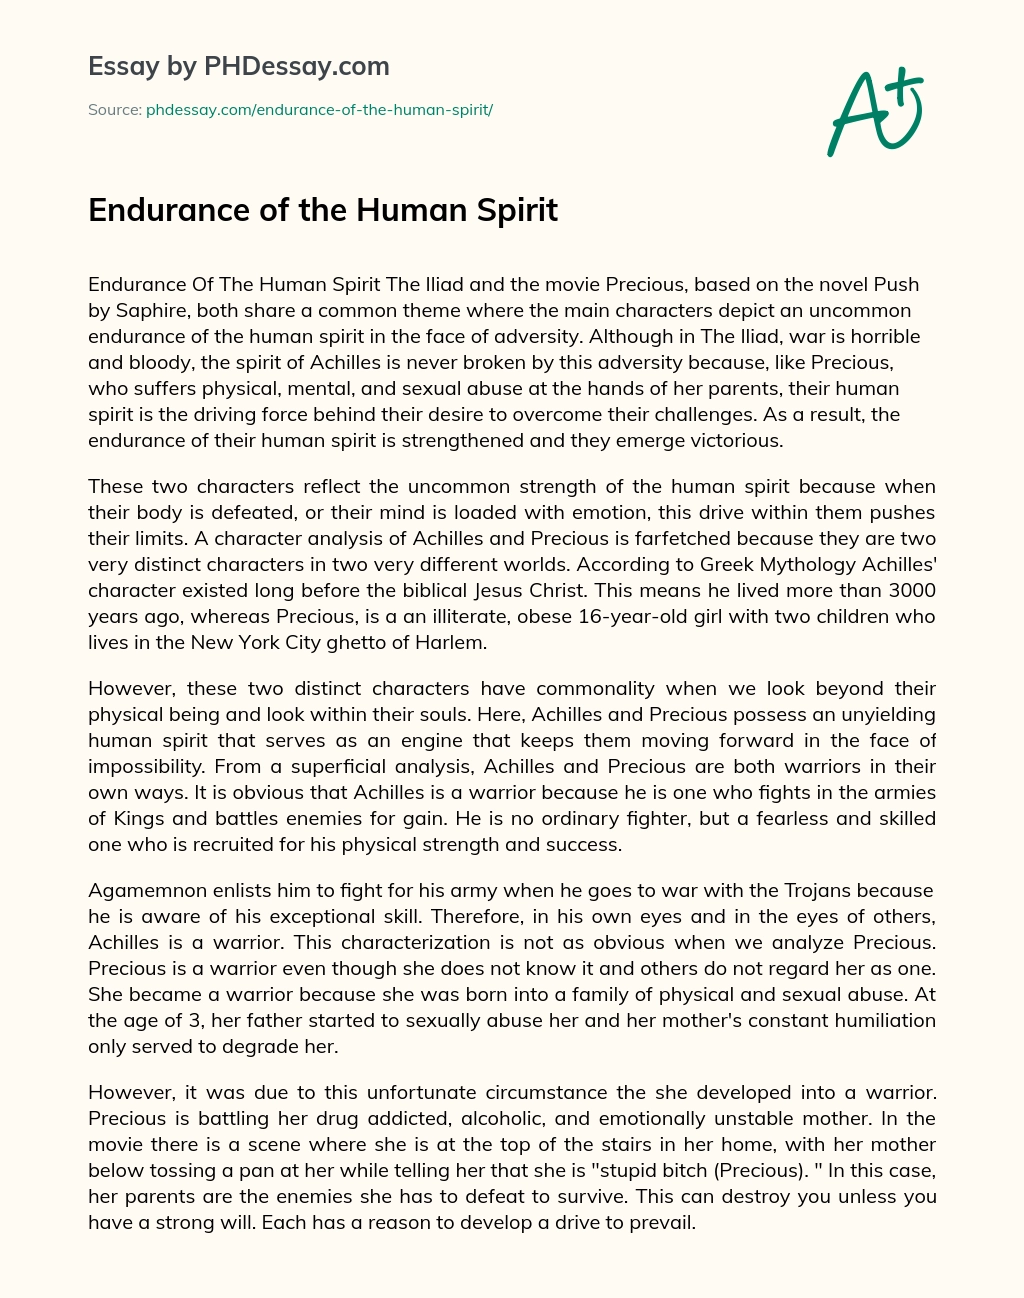 Endurance of the Human Spirit essay